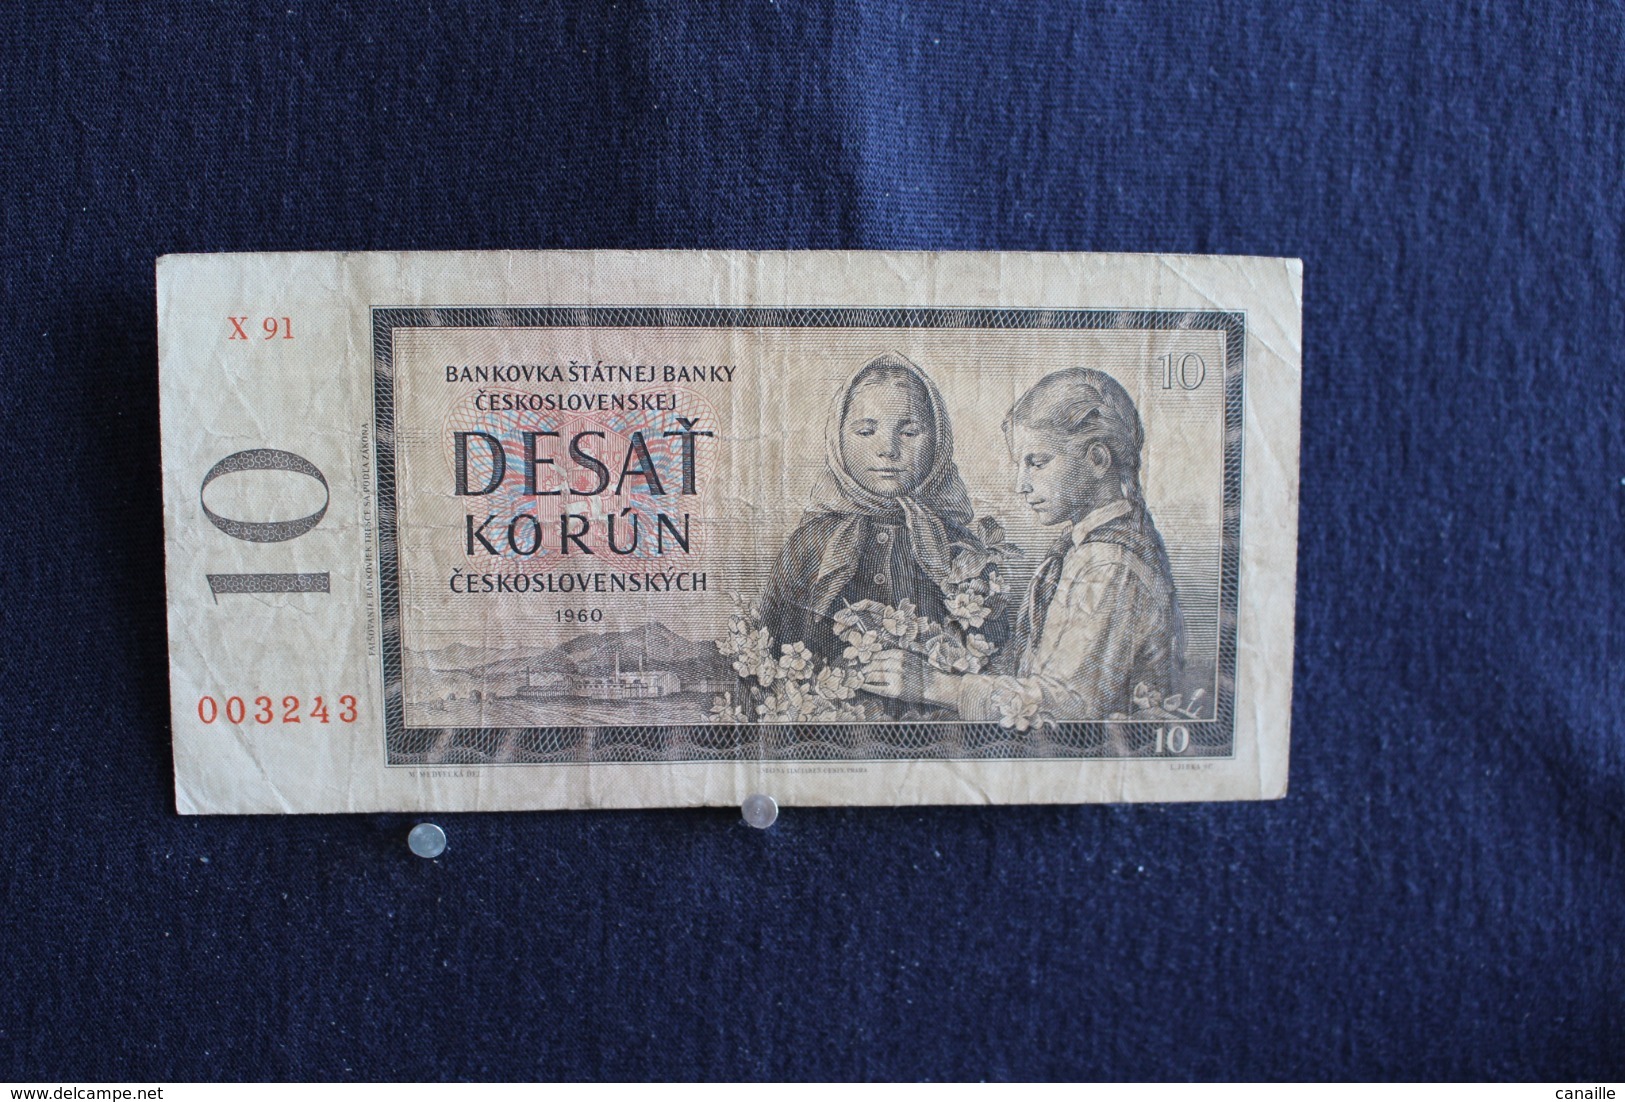 74 /  Tchécoslovaquie -  Kronen 10 Couronnes - Desat Korun   - Ceskoslovenskych  - 1960 - /  N° 003243 - Tschechoslowakei